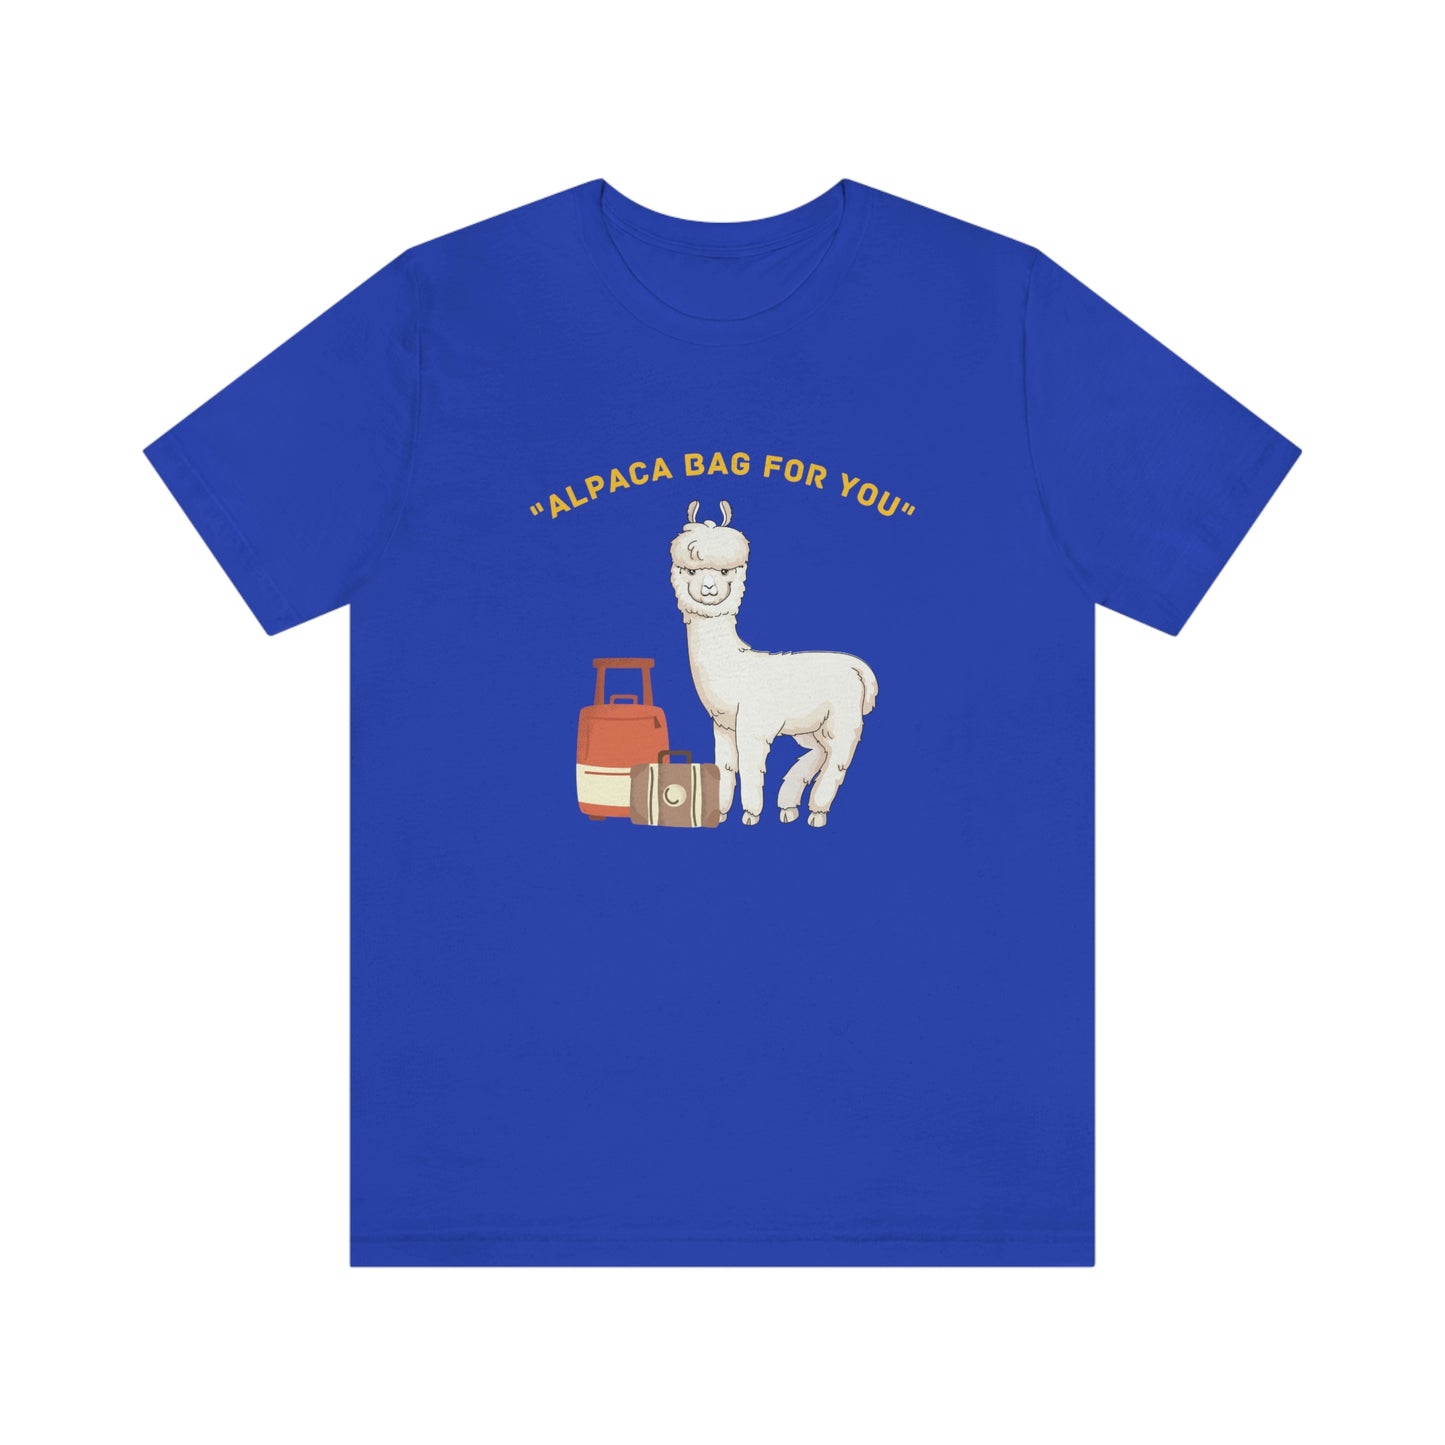 Alpaca bag for you - Men's Jersey Short Sleeve - Funny T Shirt